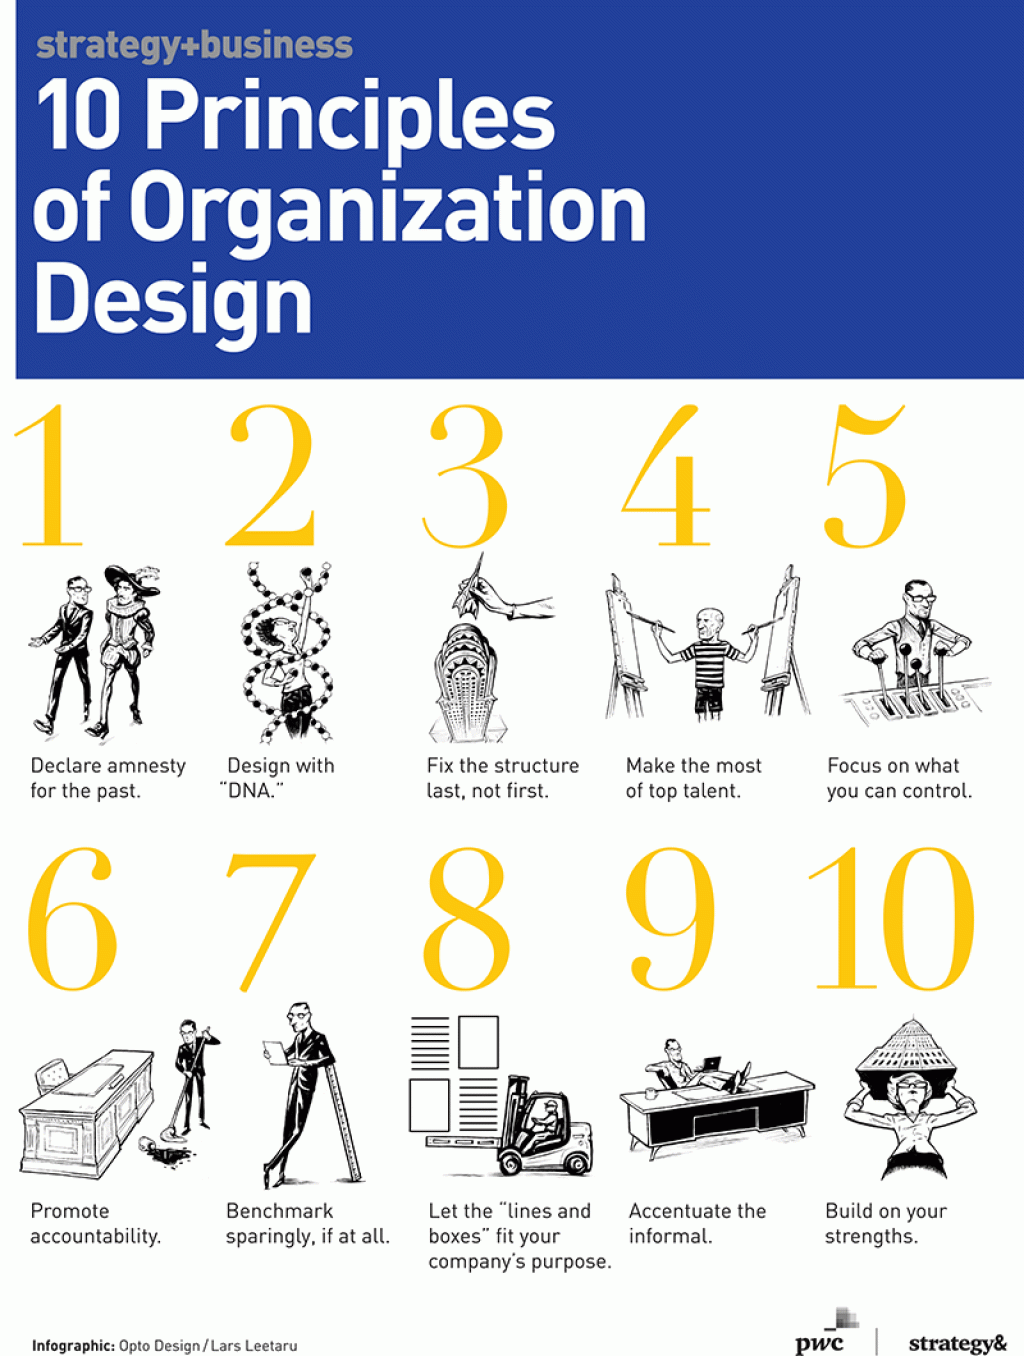 Picture of: principles of organization design